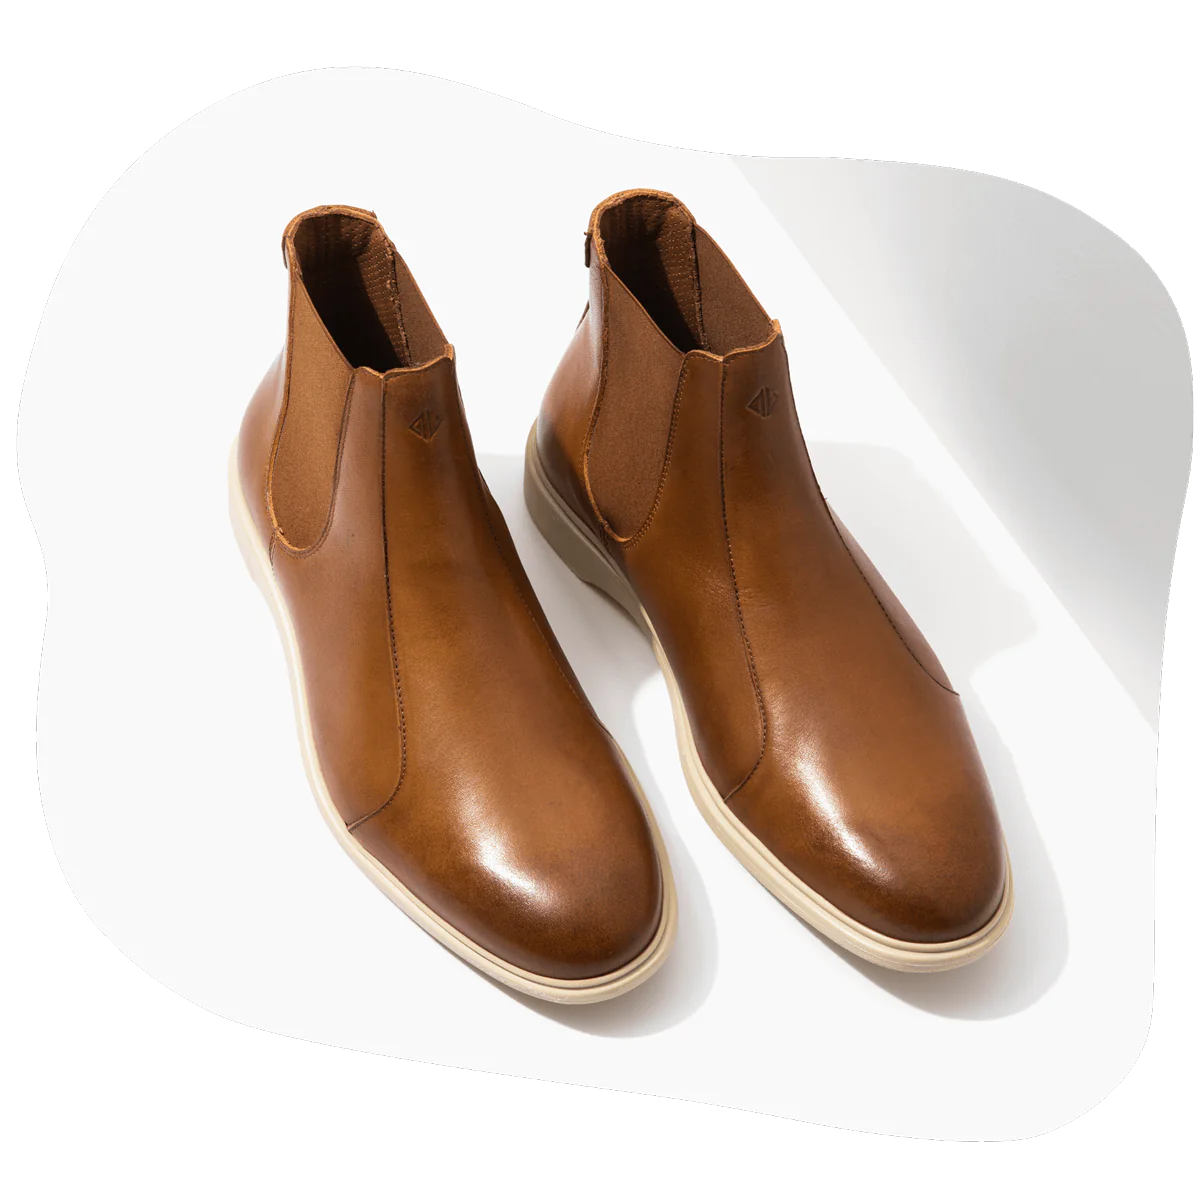 Comfortable men's chelsea boots in honey color